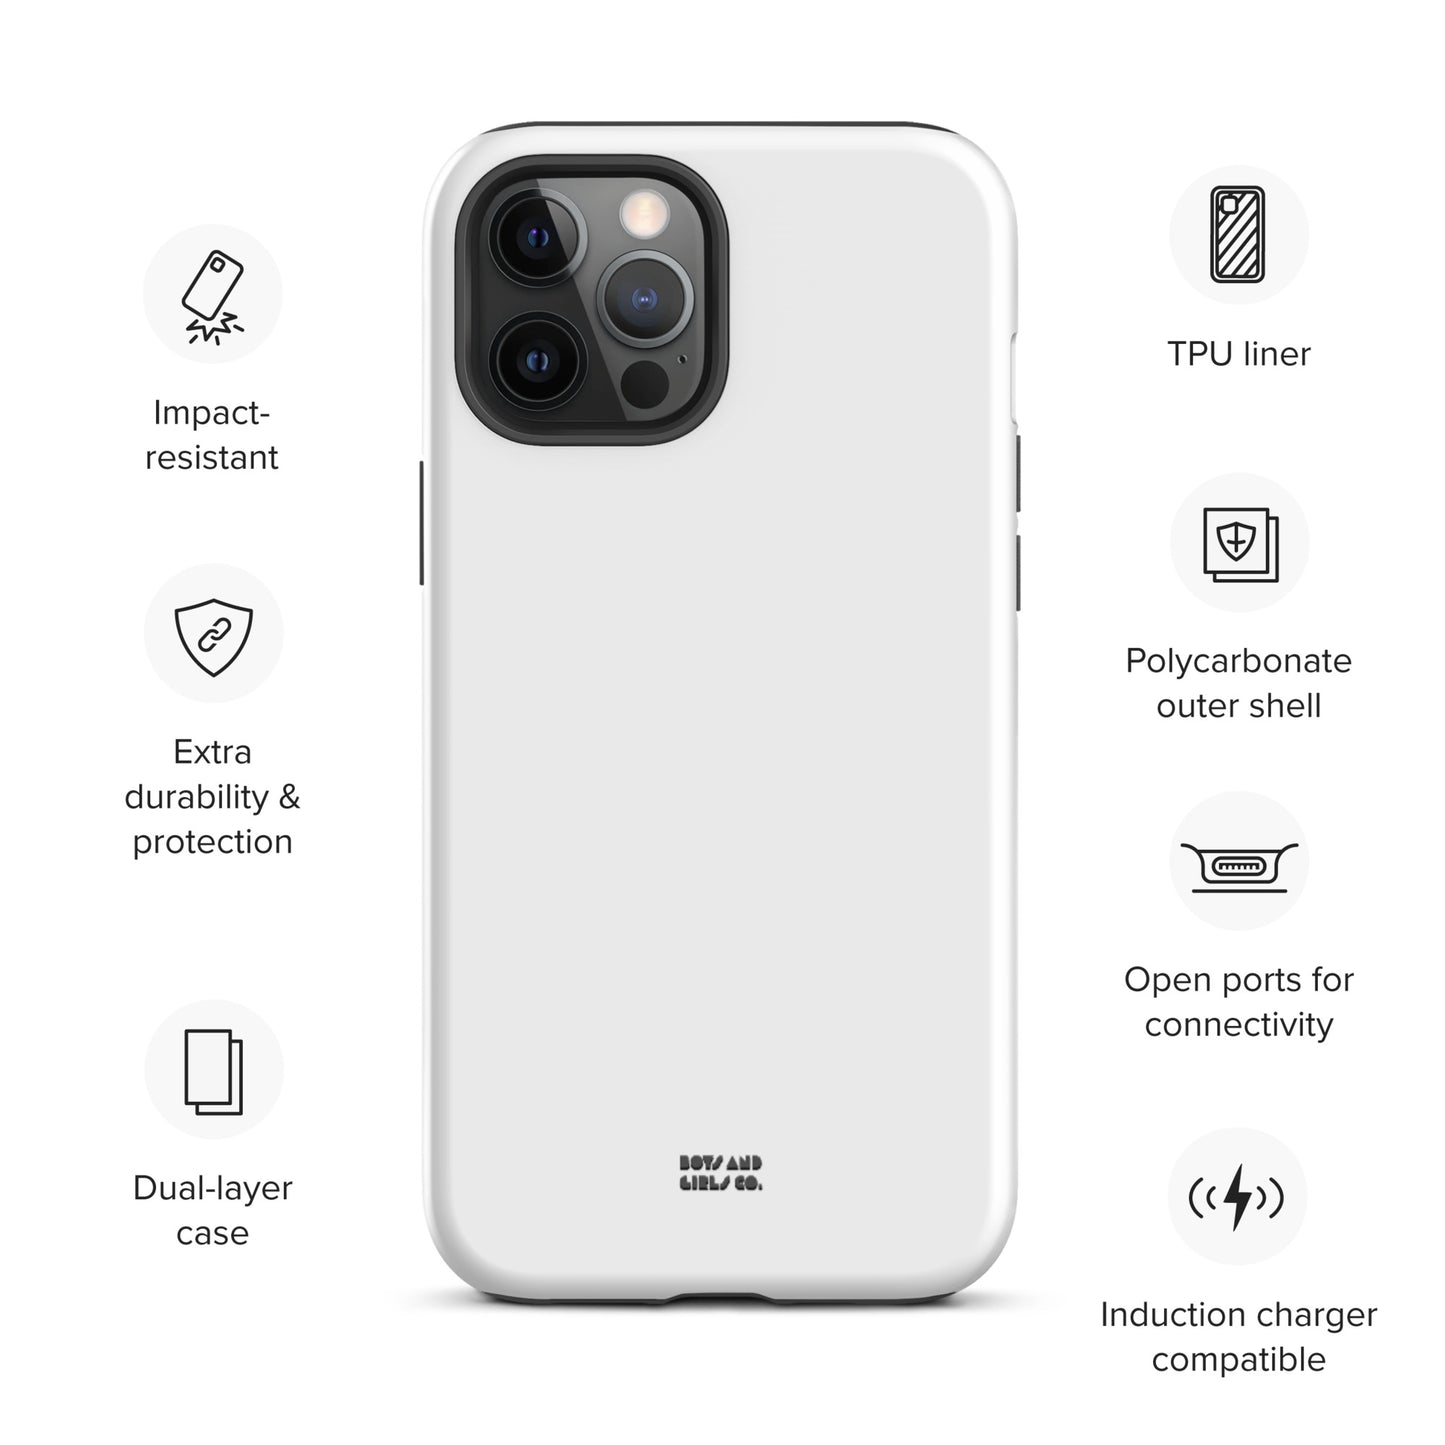 WHITE - Tough iPhone case